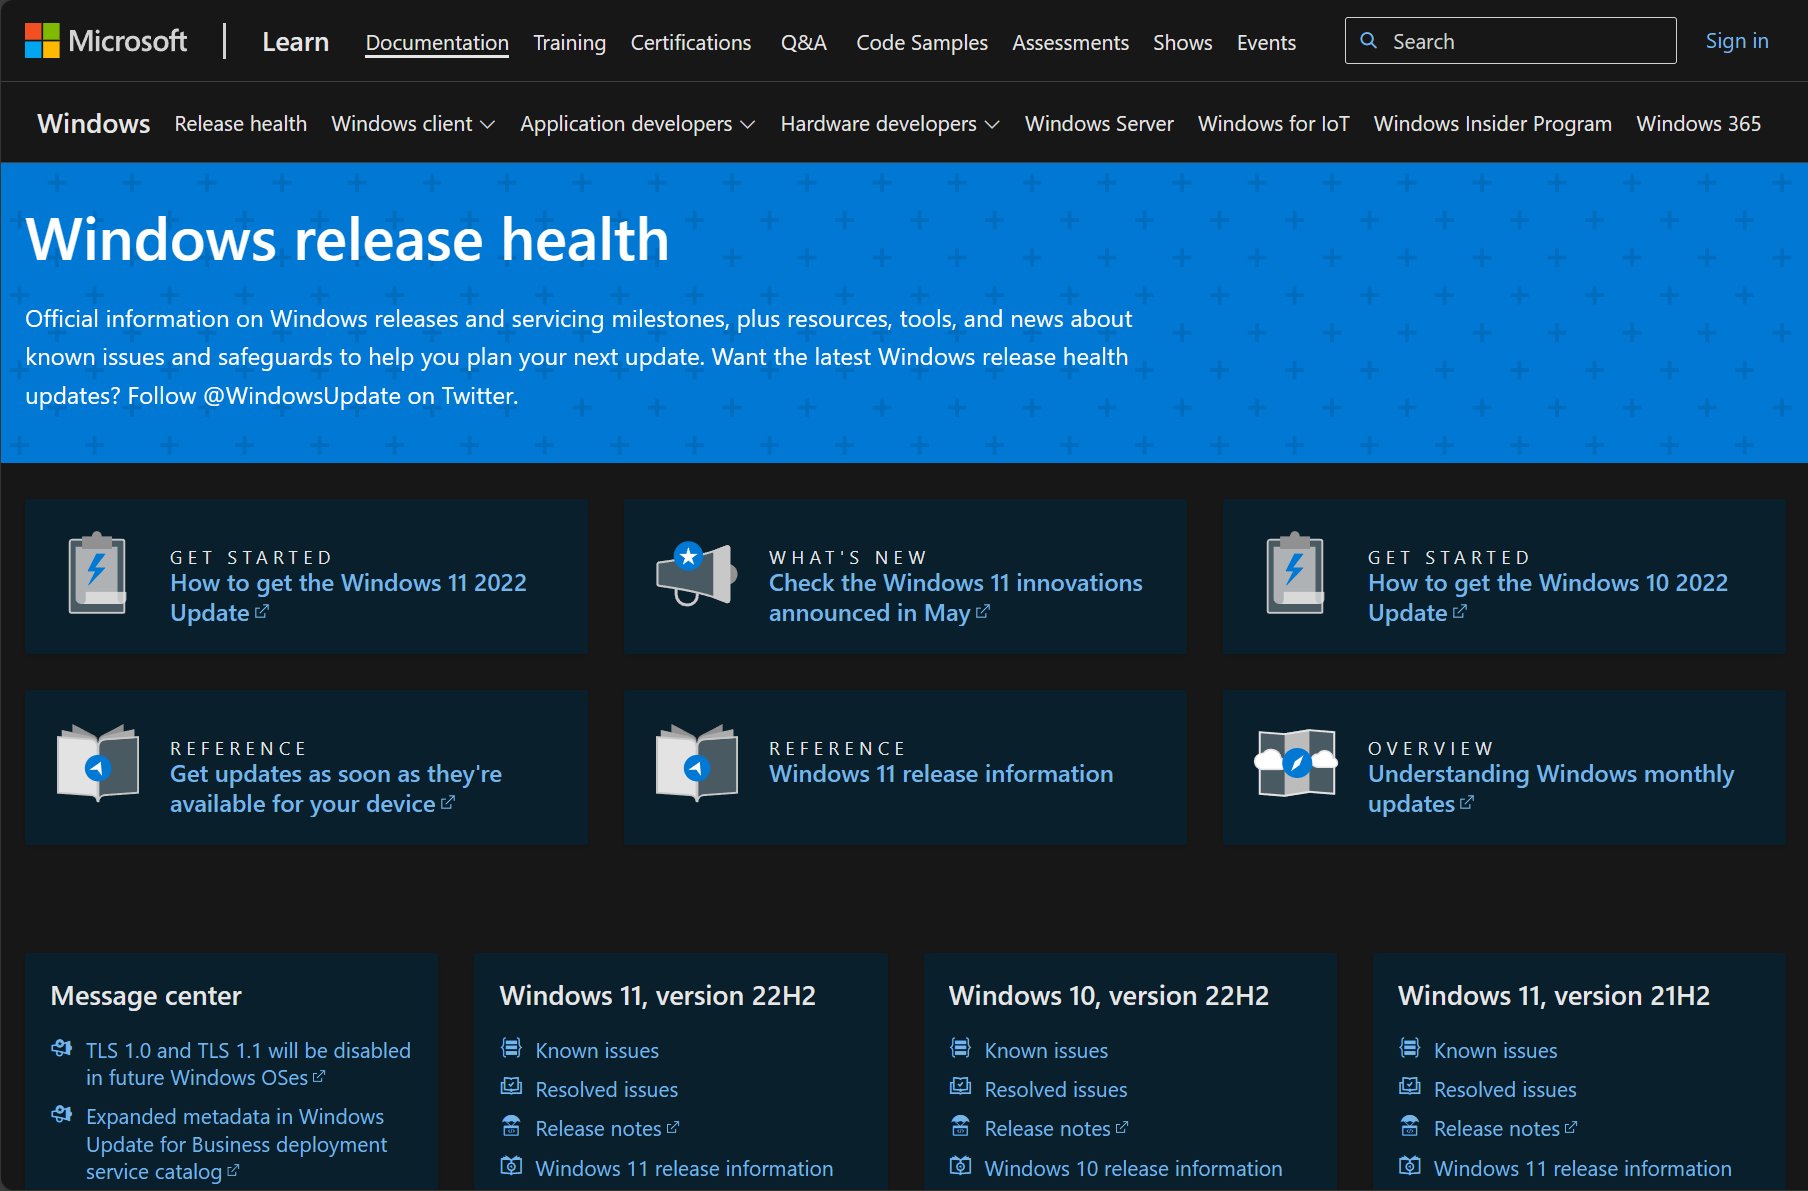 Windows release health dashboard